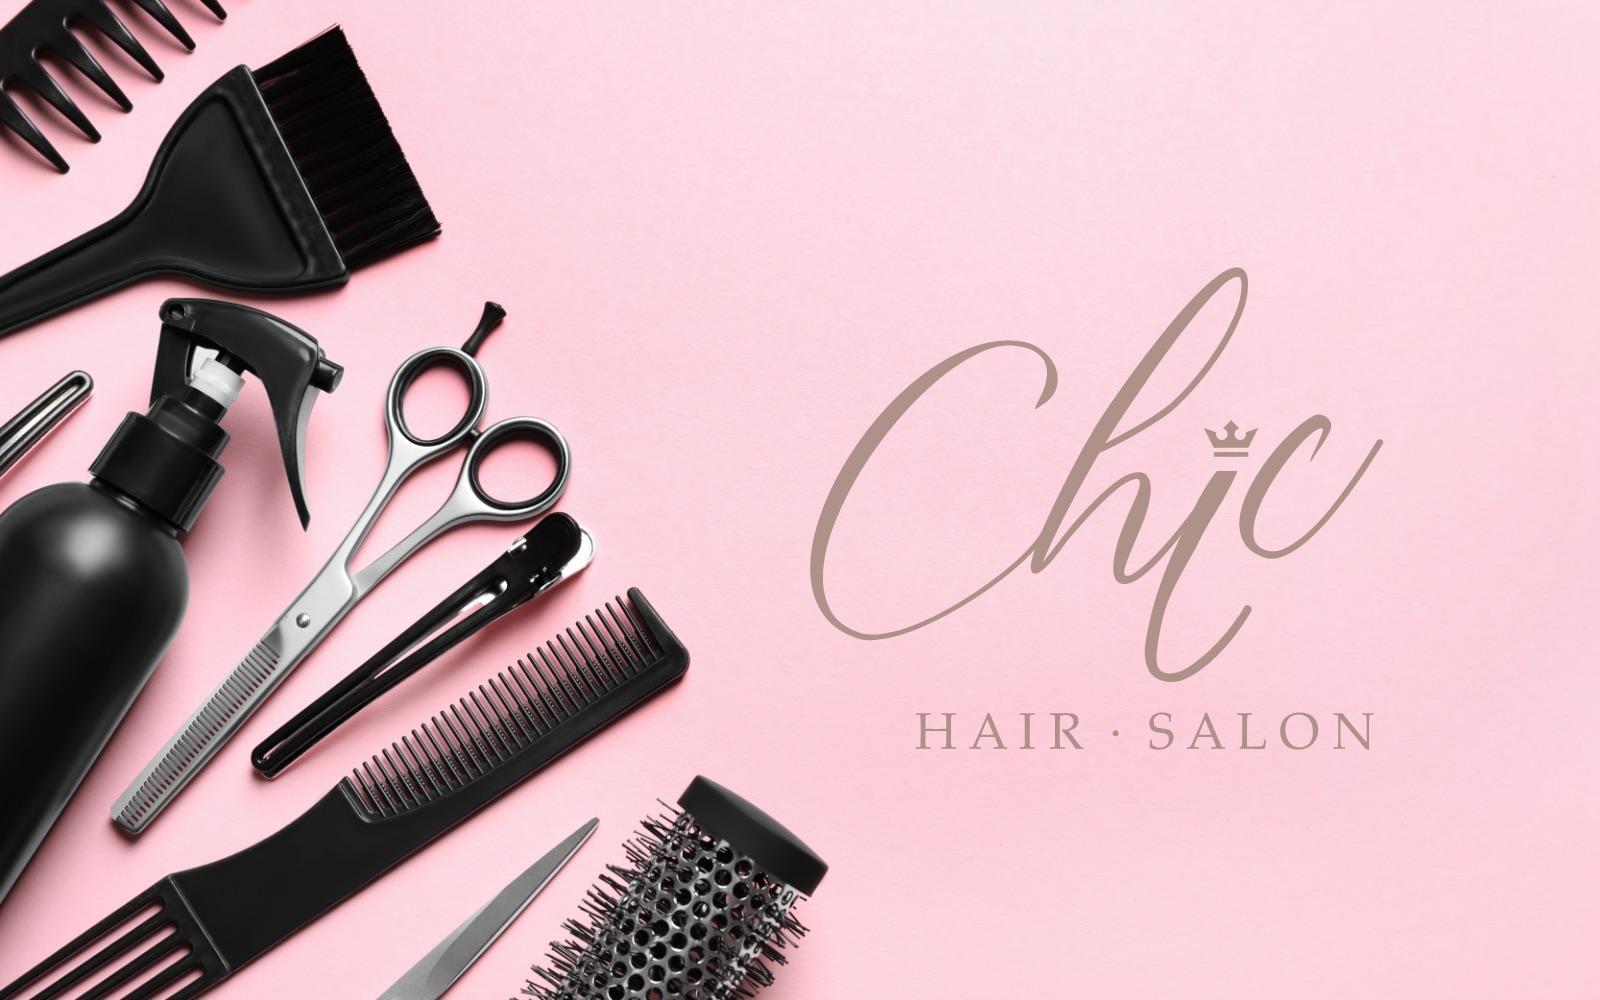 Chic Hair Salon Image